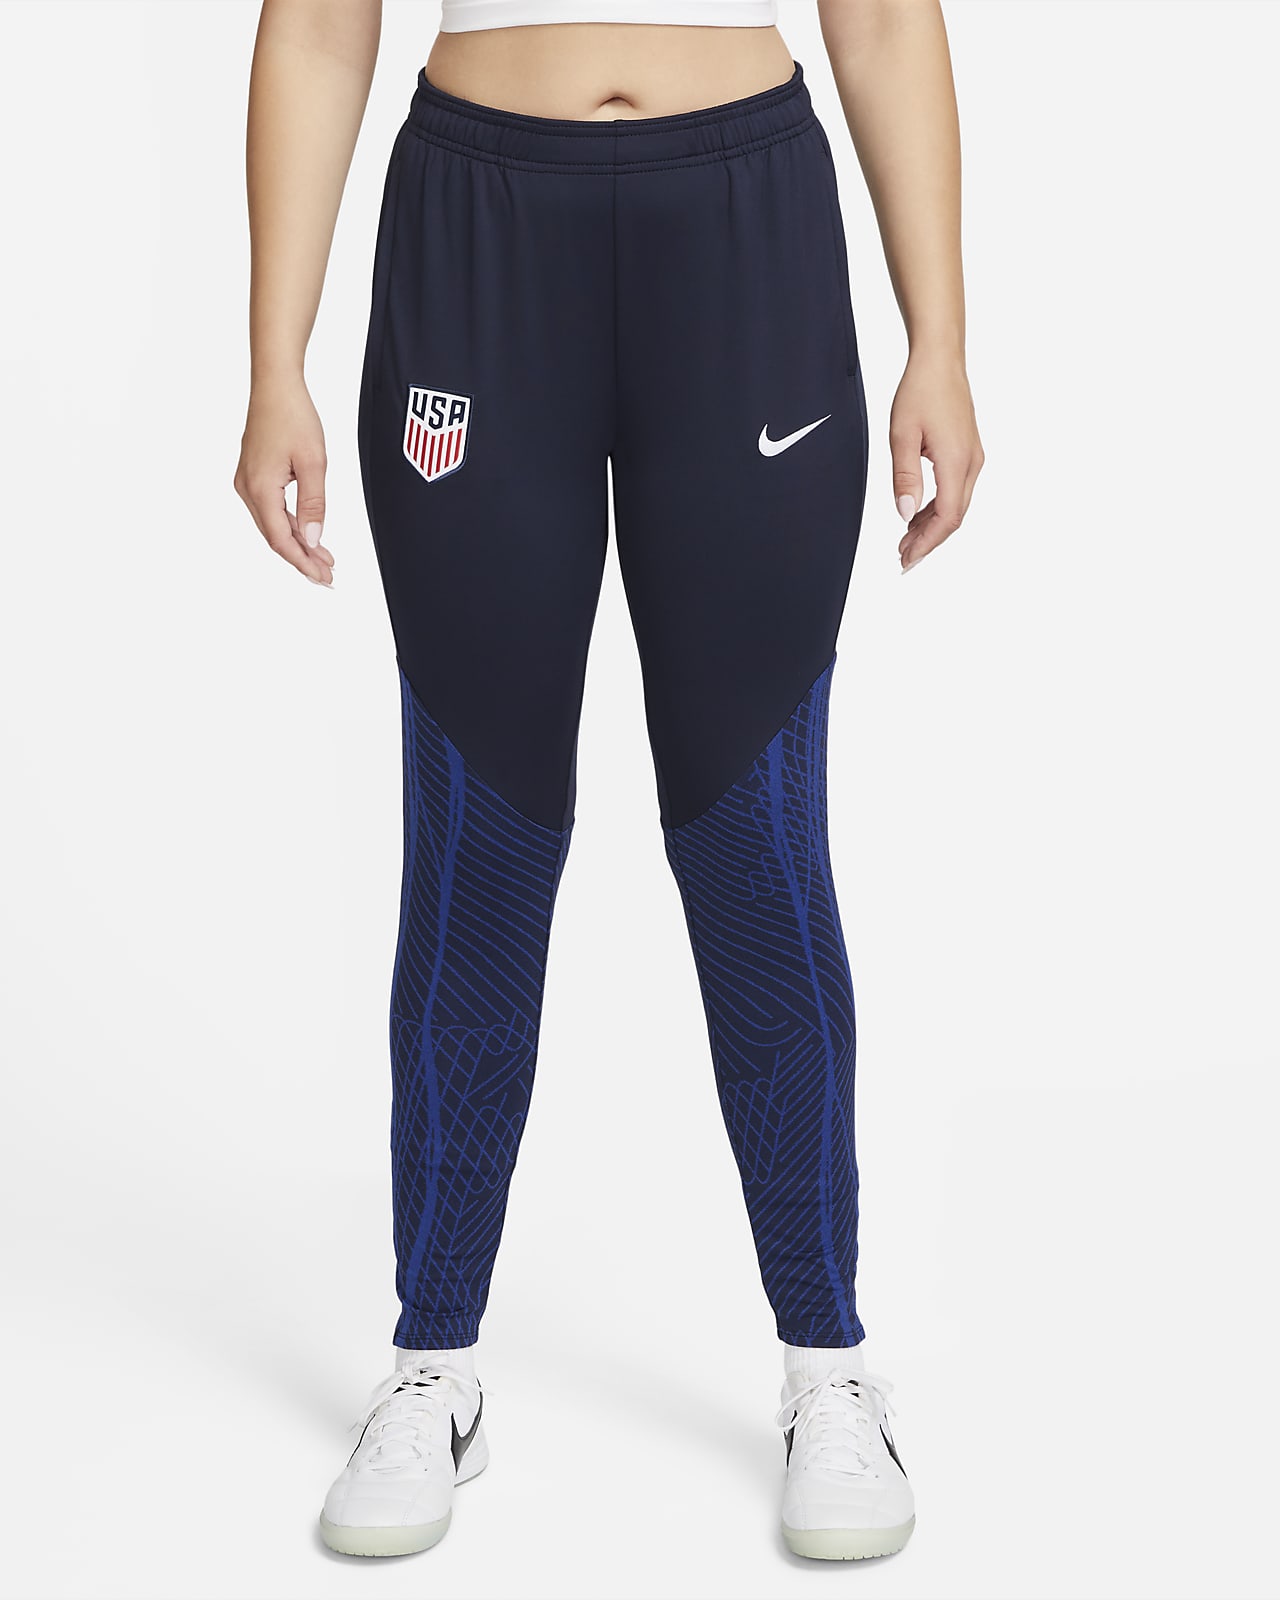 Pants de fútbol de tejido Knit para mujer Nike Dri-FIT U.S. Strike